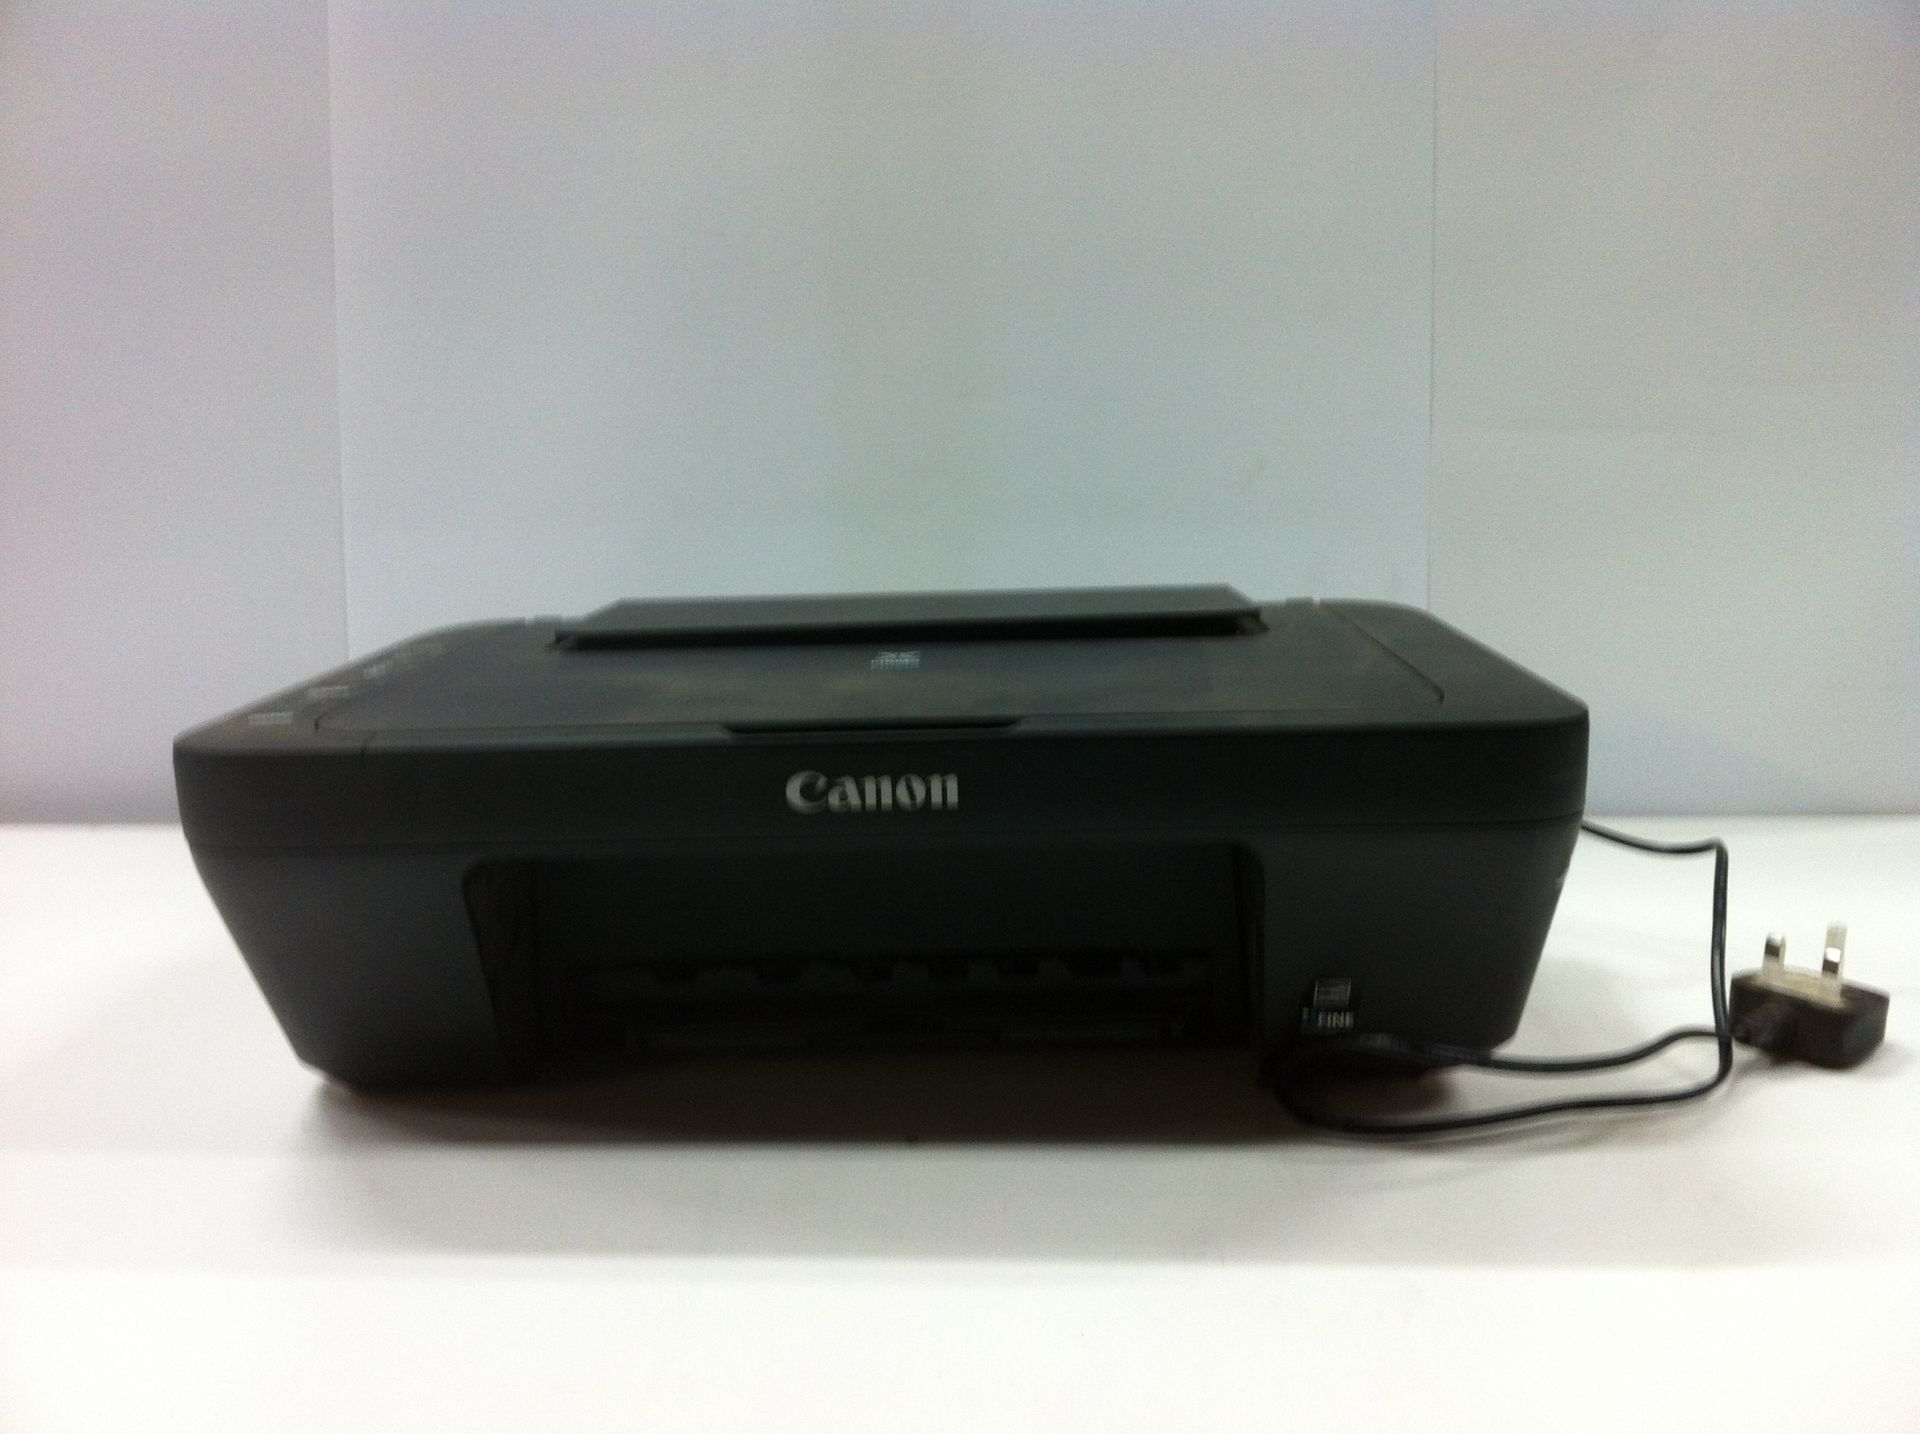 Canon Printer/Scanner - No Model - Image 2 of 2